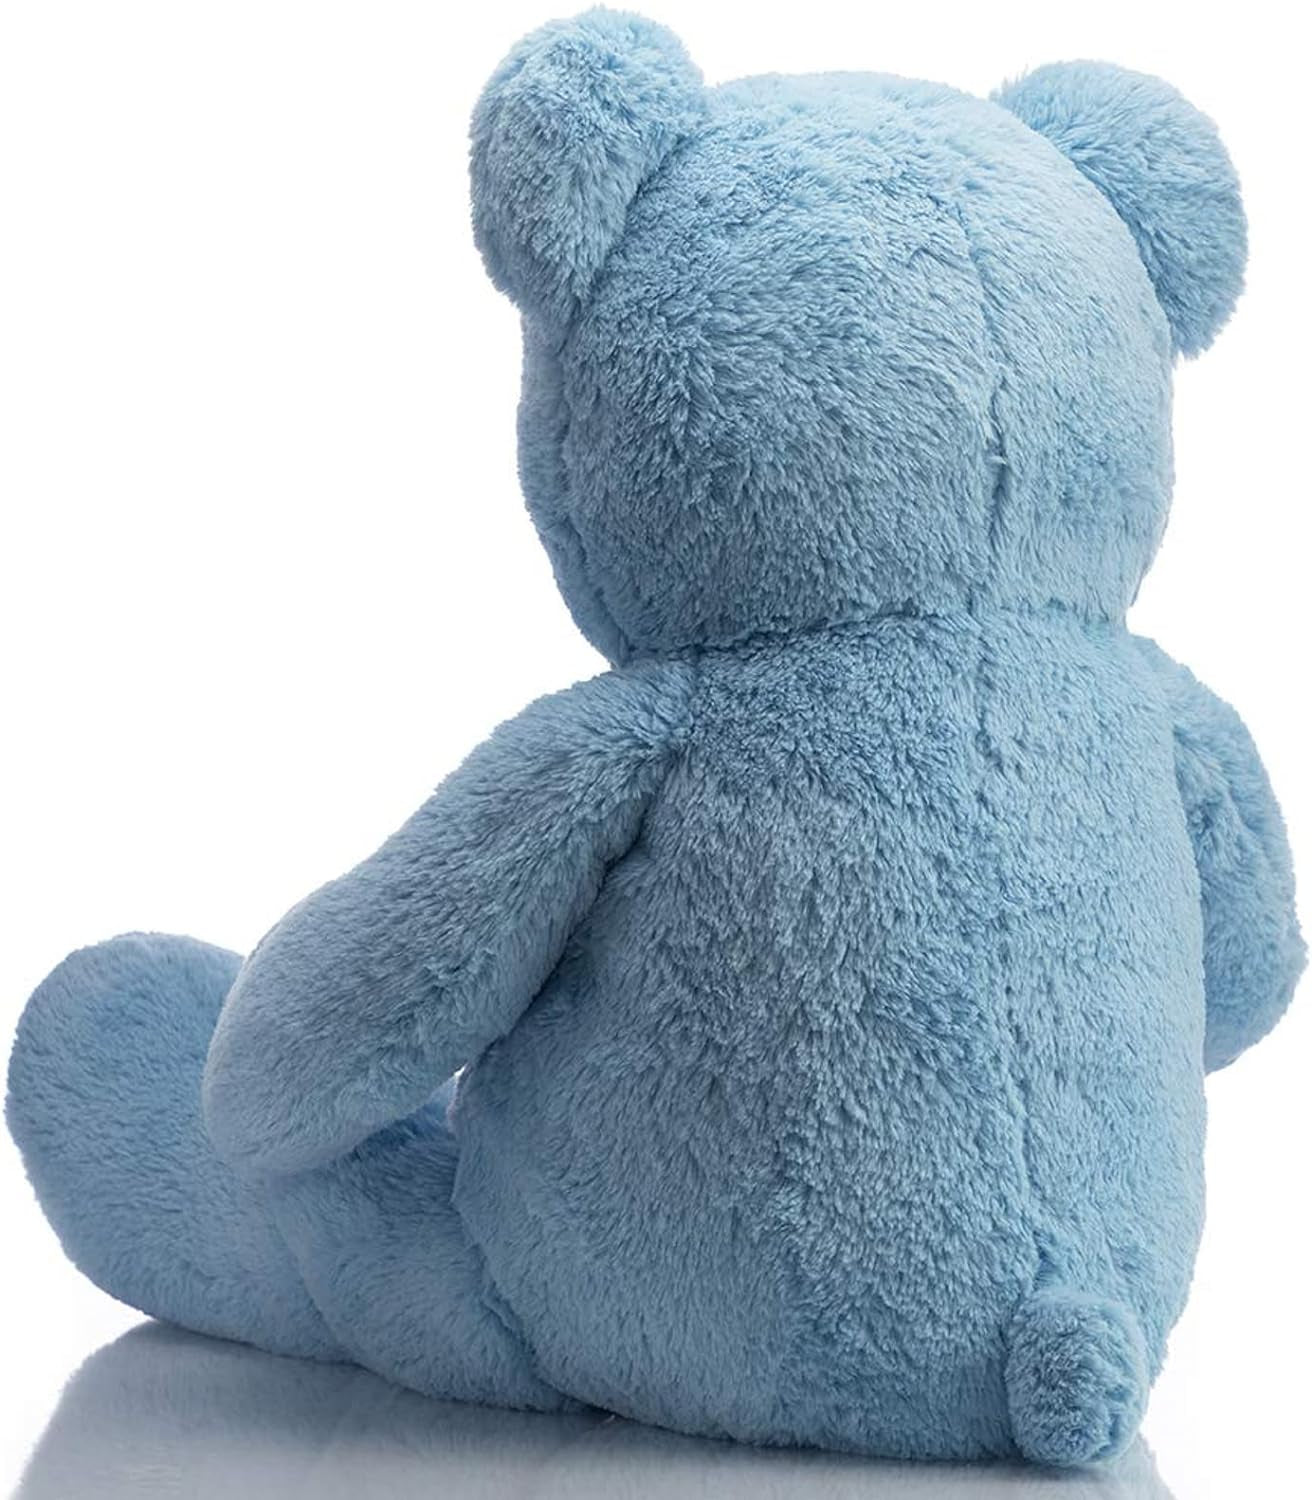 90Cm Giant Teddy Bear Stuffed Animal Soft Toy Large Love Gift Child Dolls Plush 36Inch Teddy Bears, Light Blue